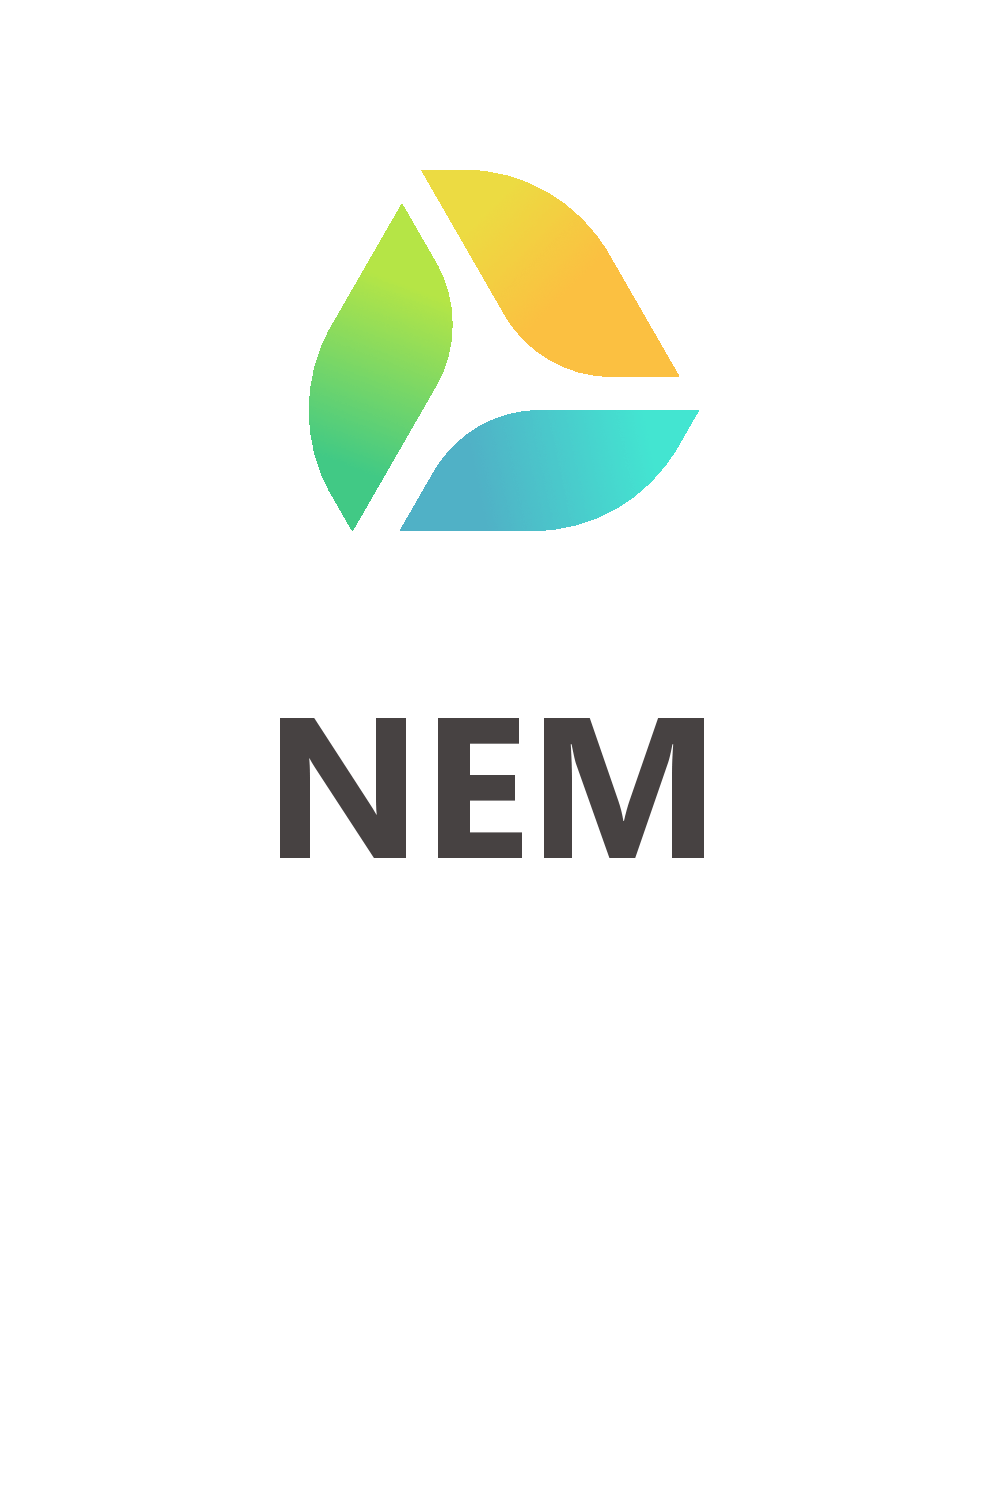 Nem Logo - Another NEM logo - Ideas - NEM Forum